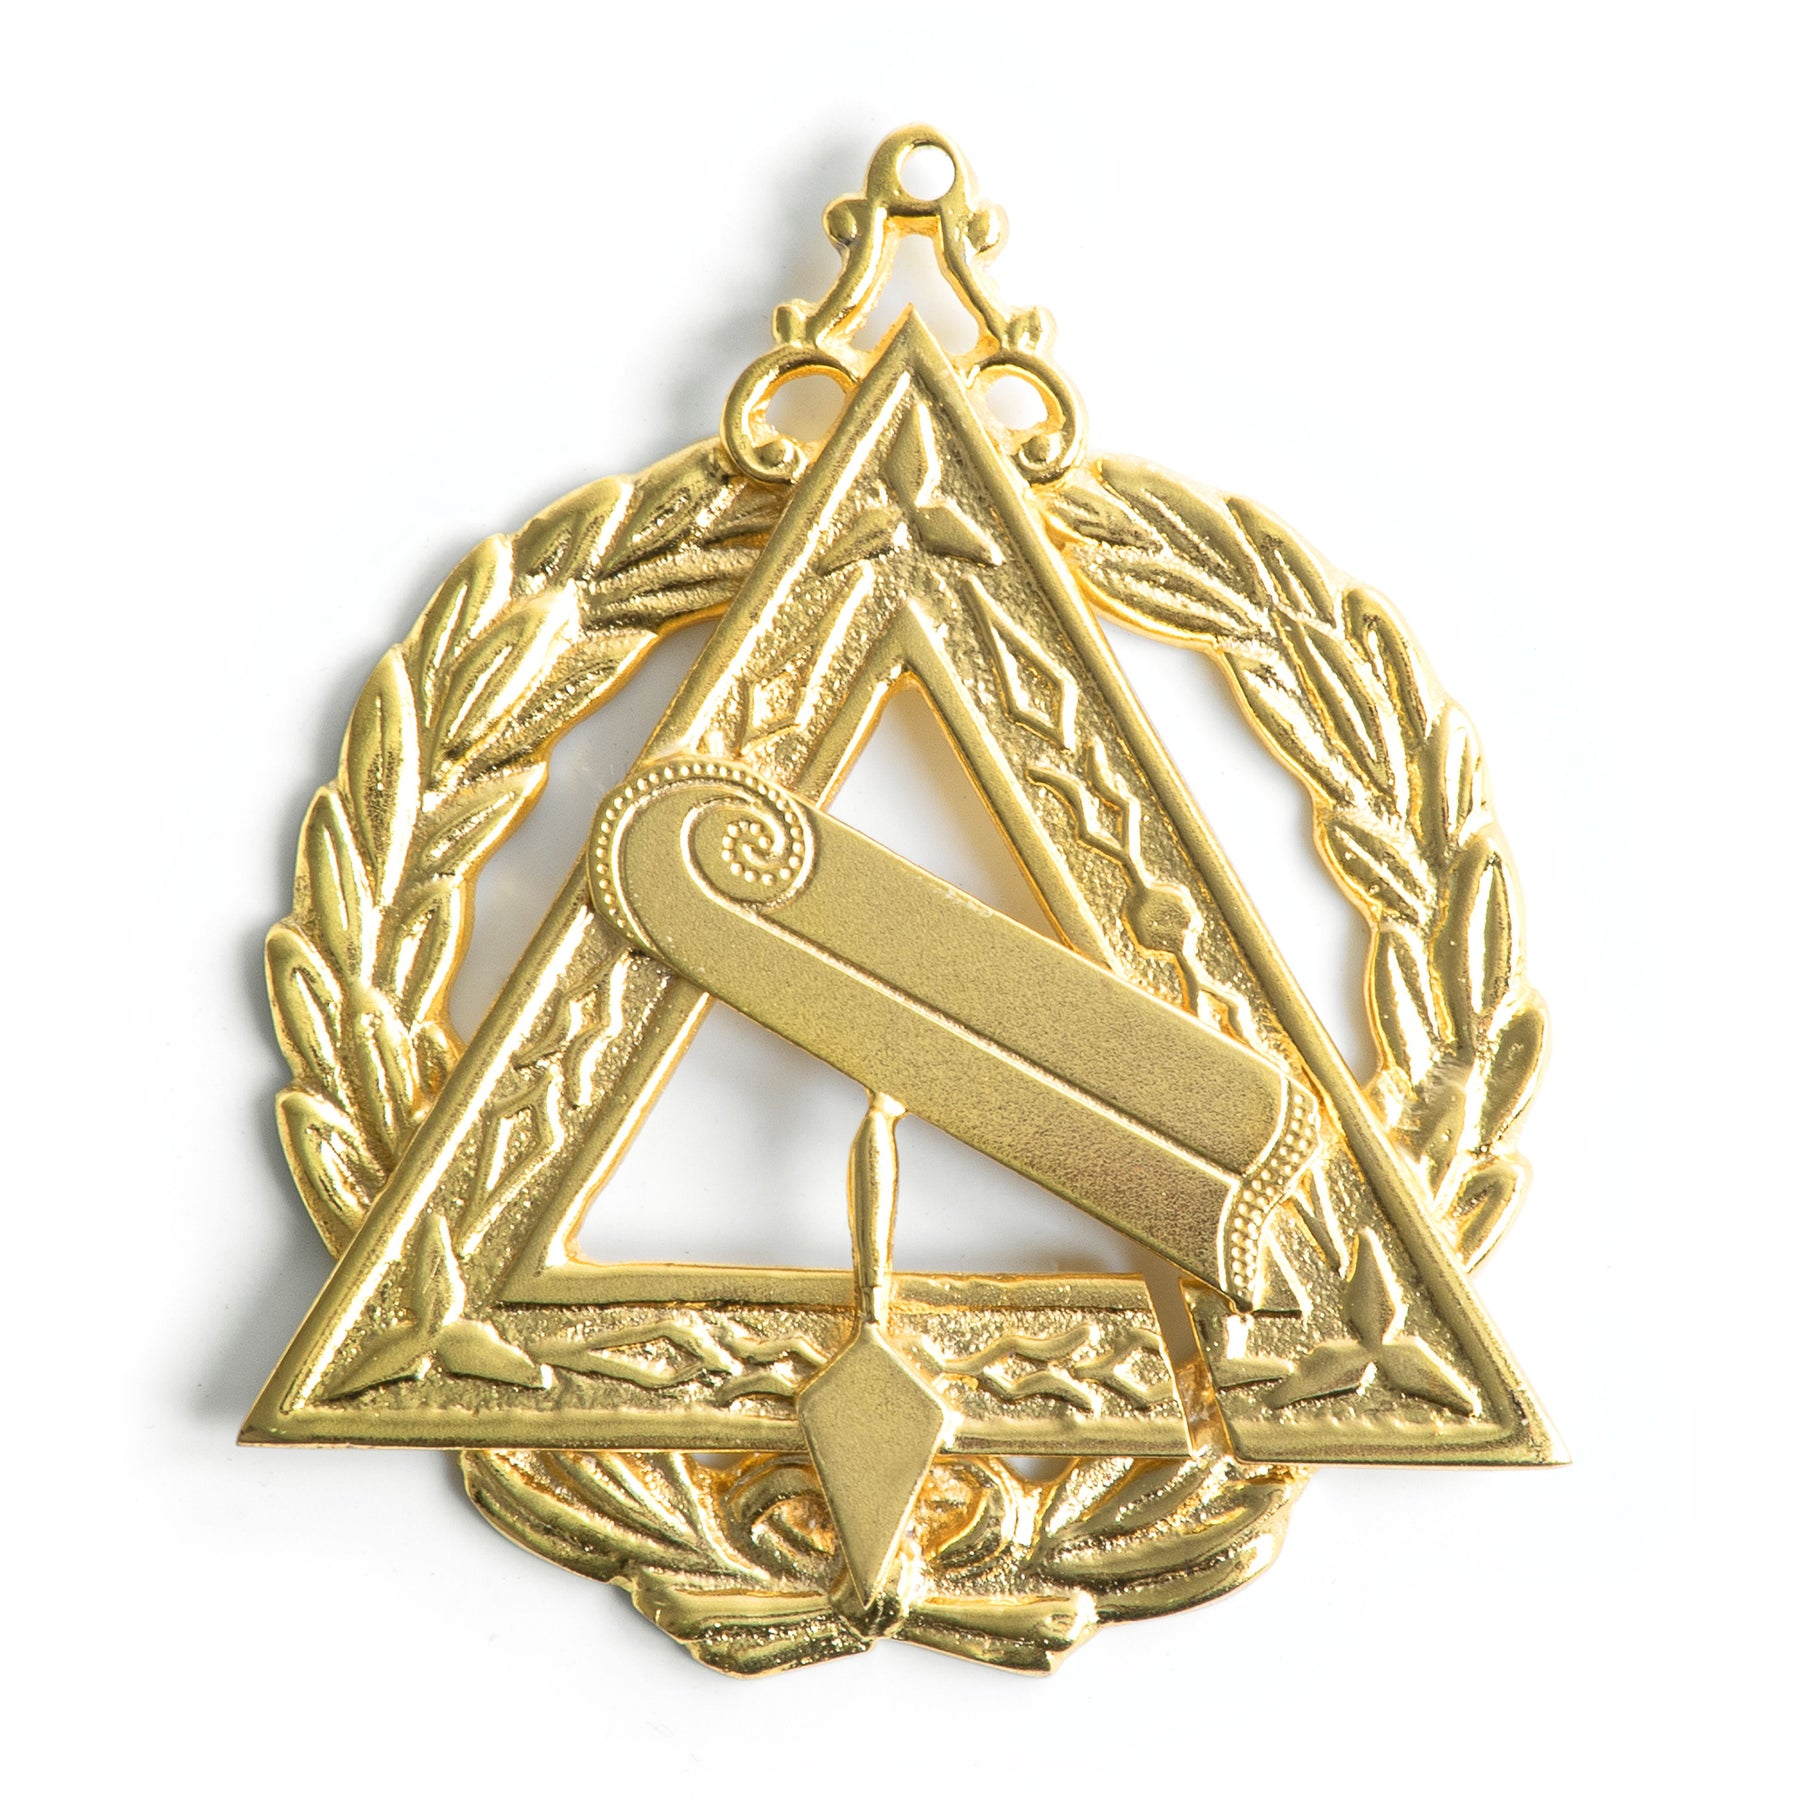 Grand Marshal Royal & Select Masters Officer Collar Jewel - Gold Plated - Bricks Masons